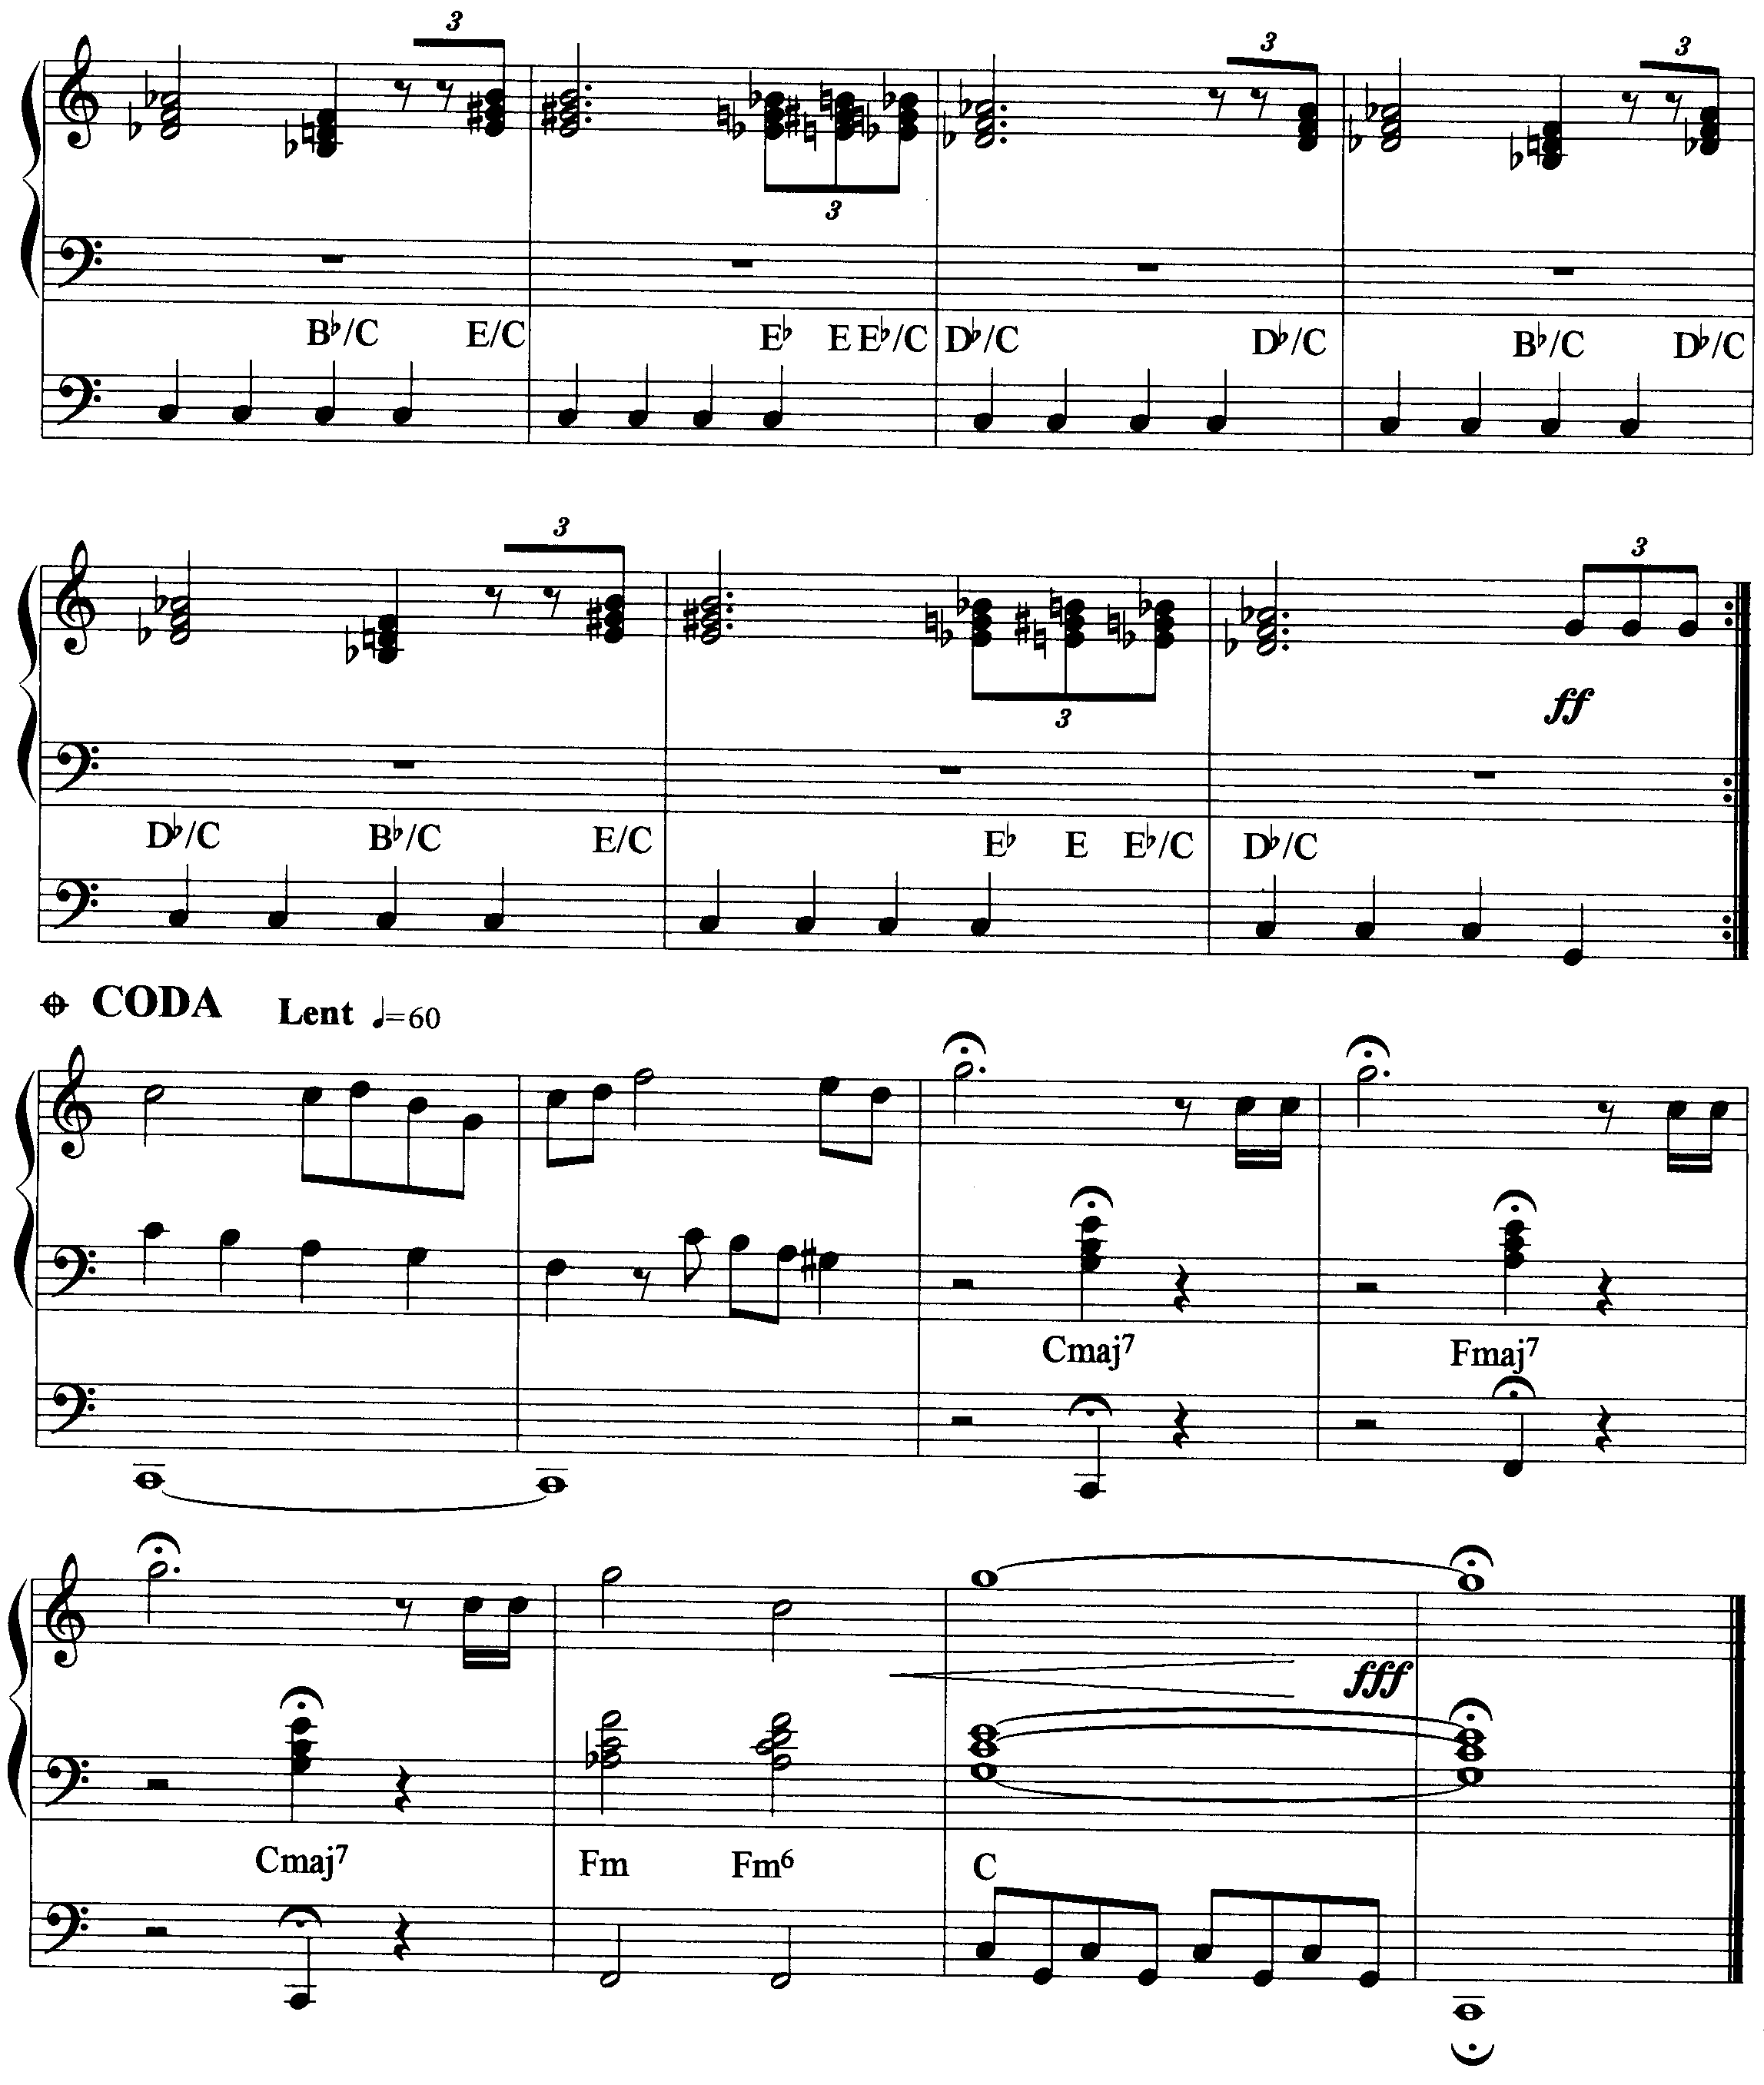 amelie soundtrack piano sheet music pdf